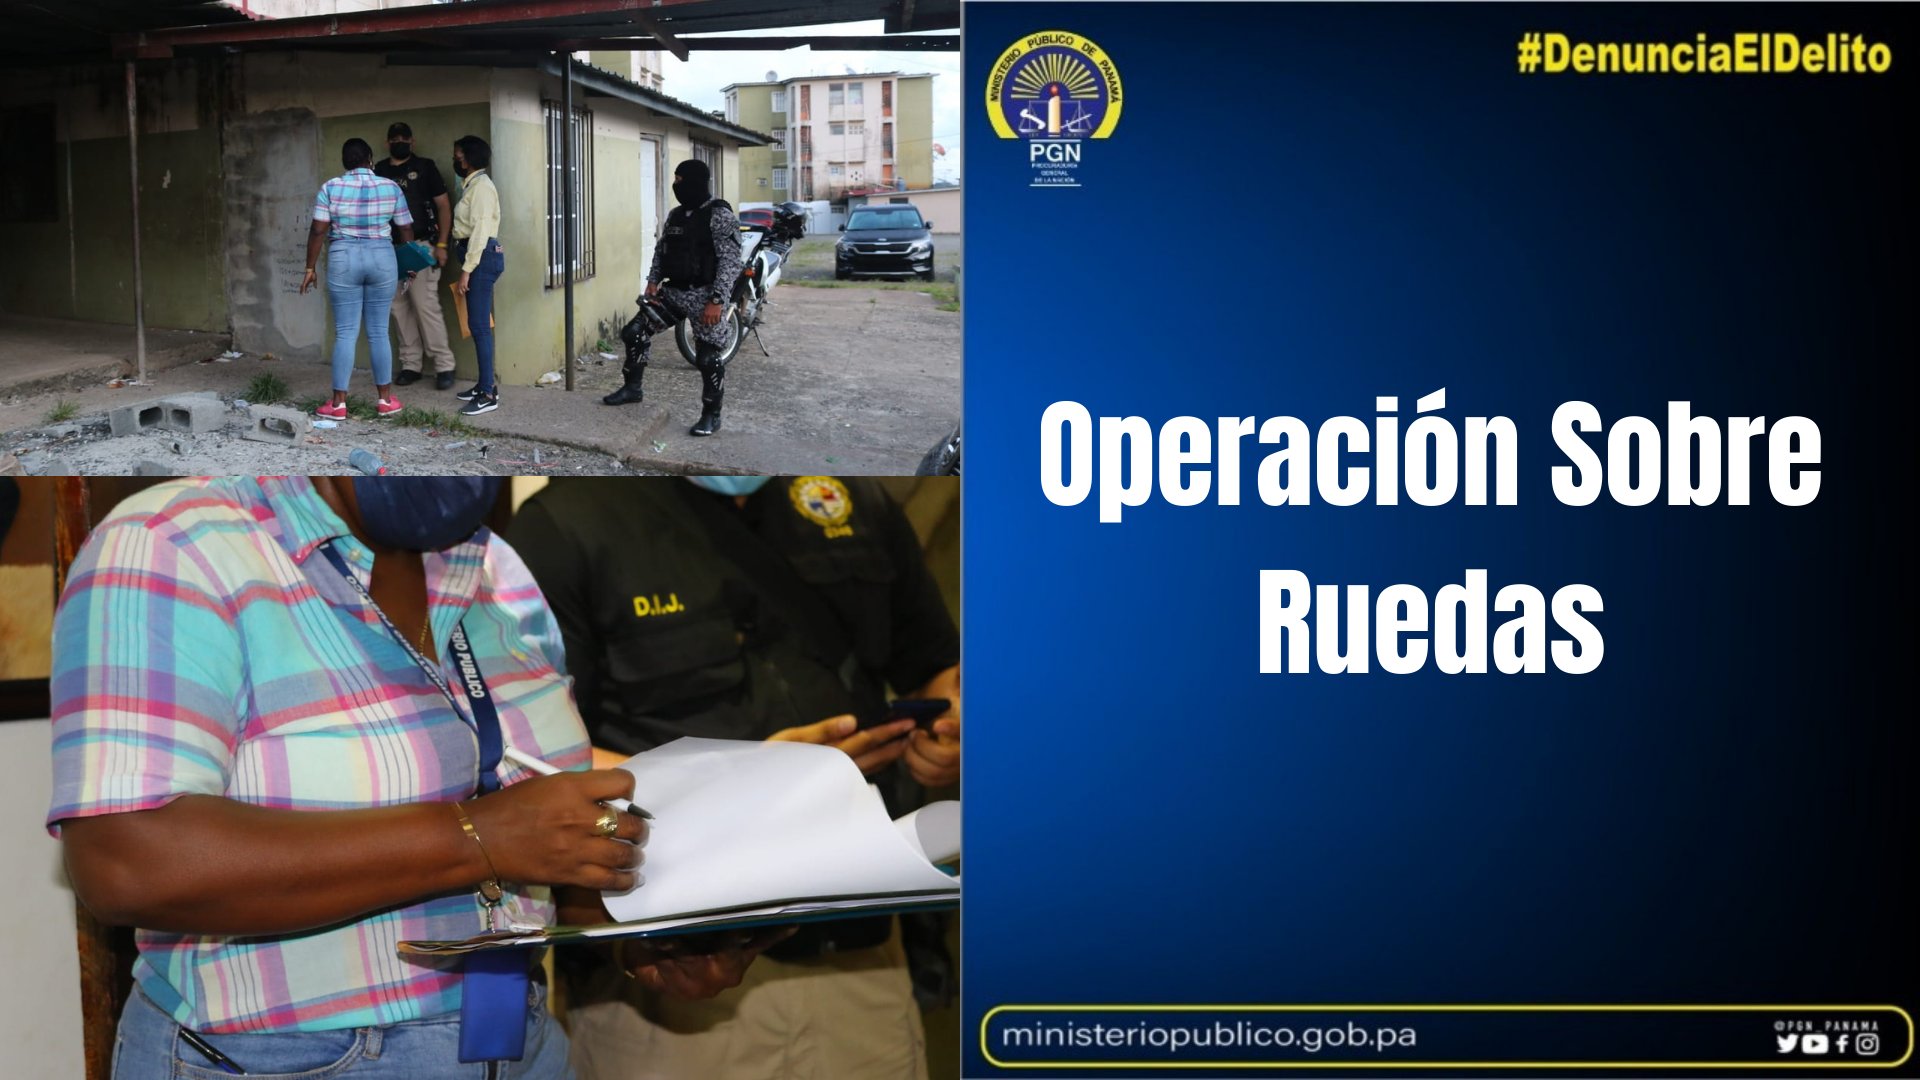 Imputan cargos por asociación ilícita, falsificación de documentos y corrupción de servidores públicos para aprehendidos en Operación “Sobre Ruedas”   